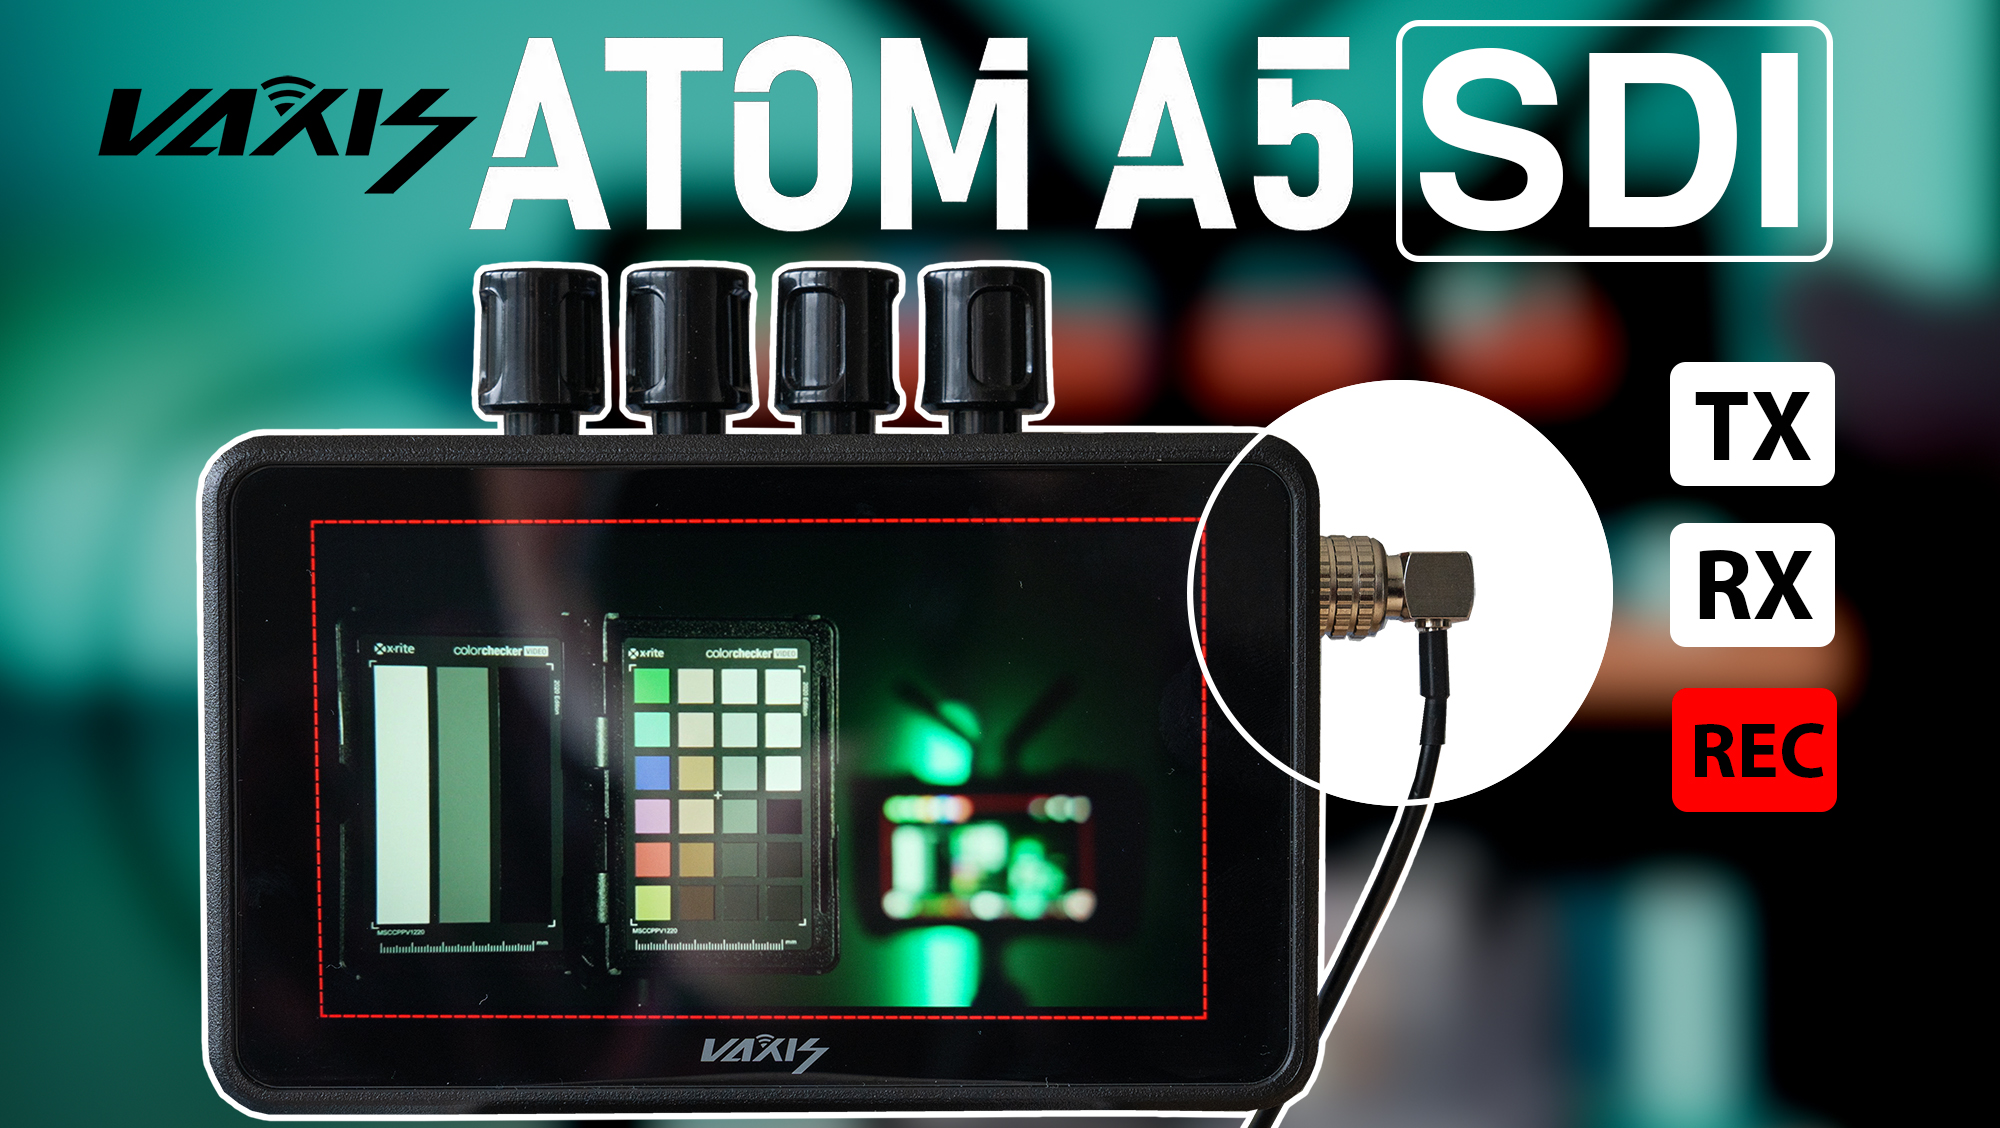 Vaxis Atom A5 SDI Review